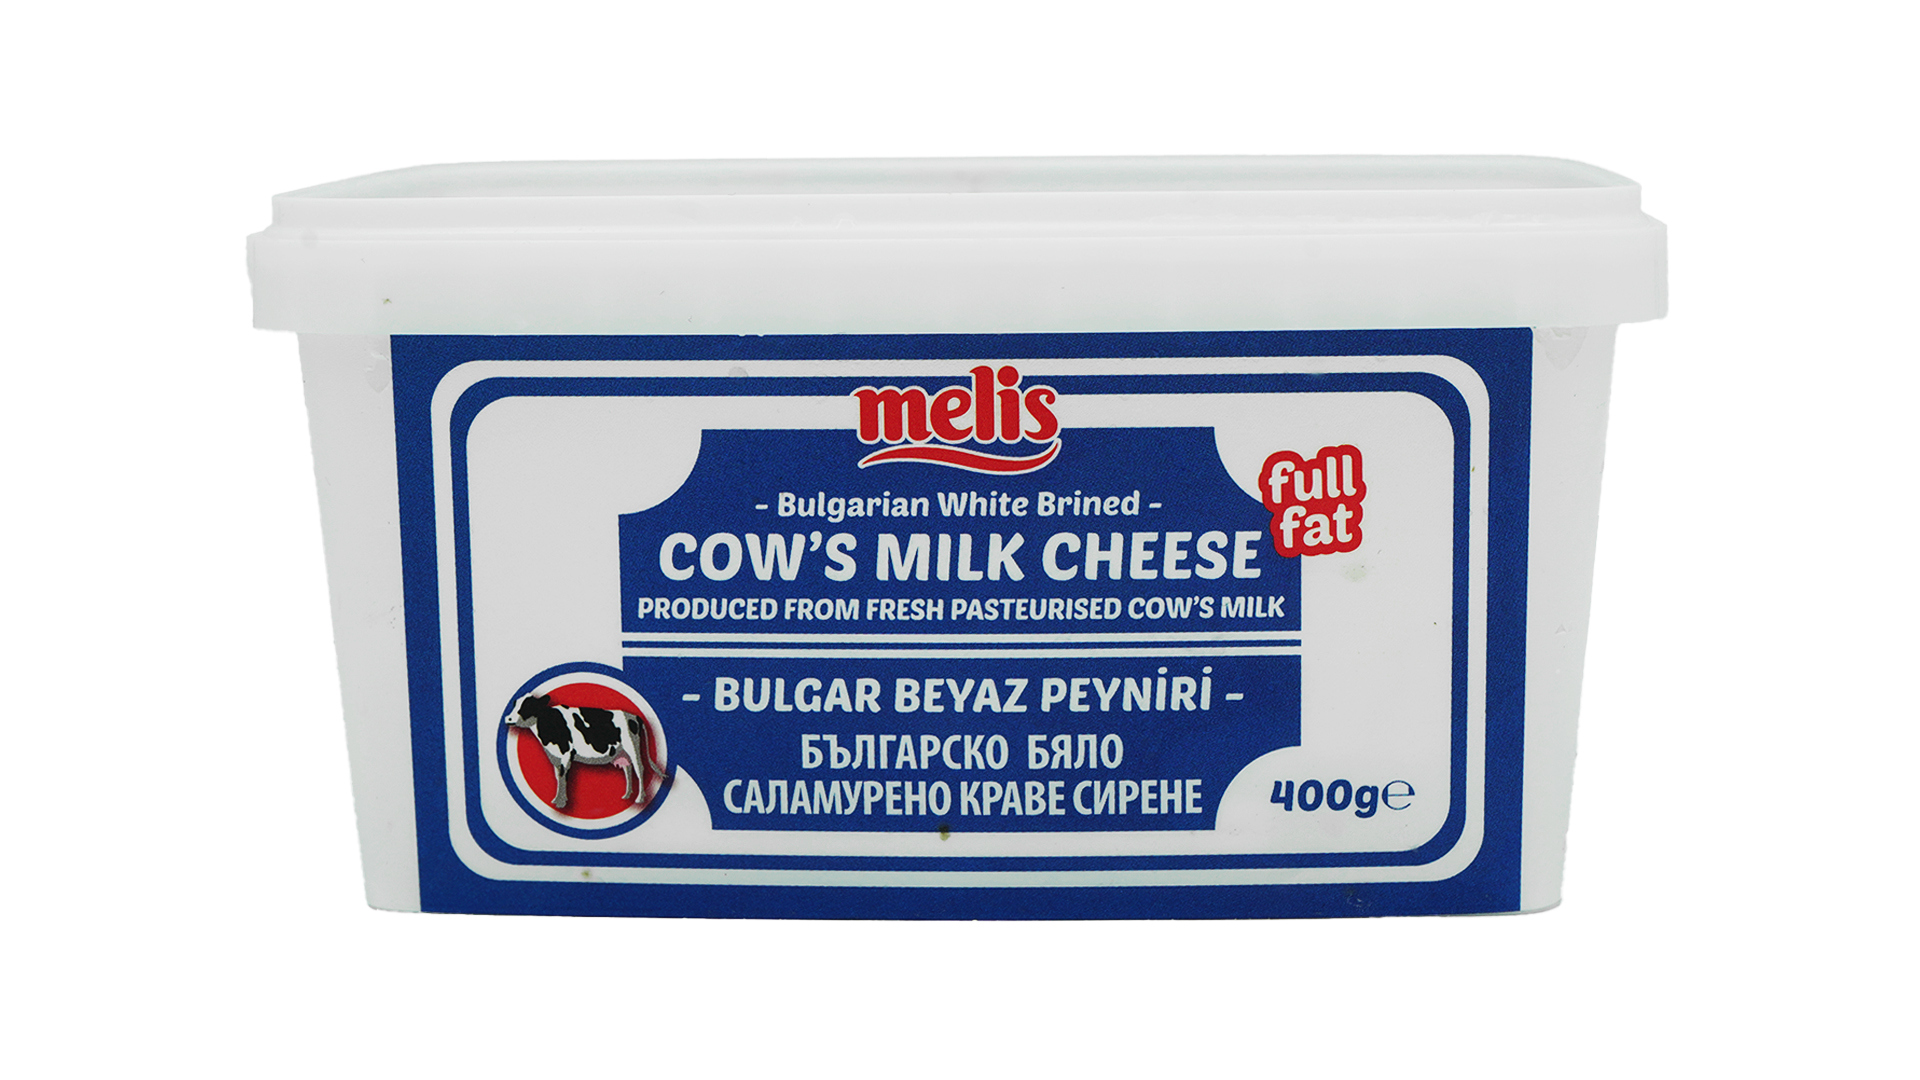 Melis bulgarian cows milk cheese 400g 2